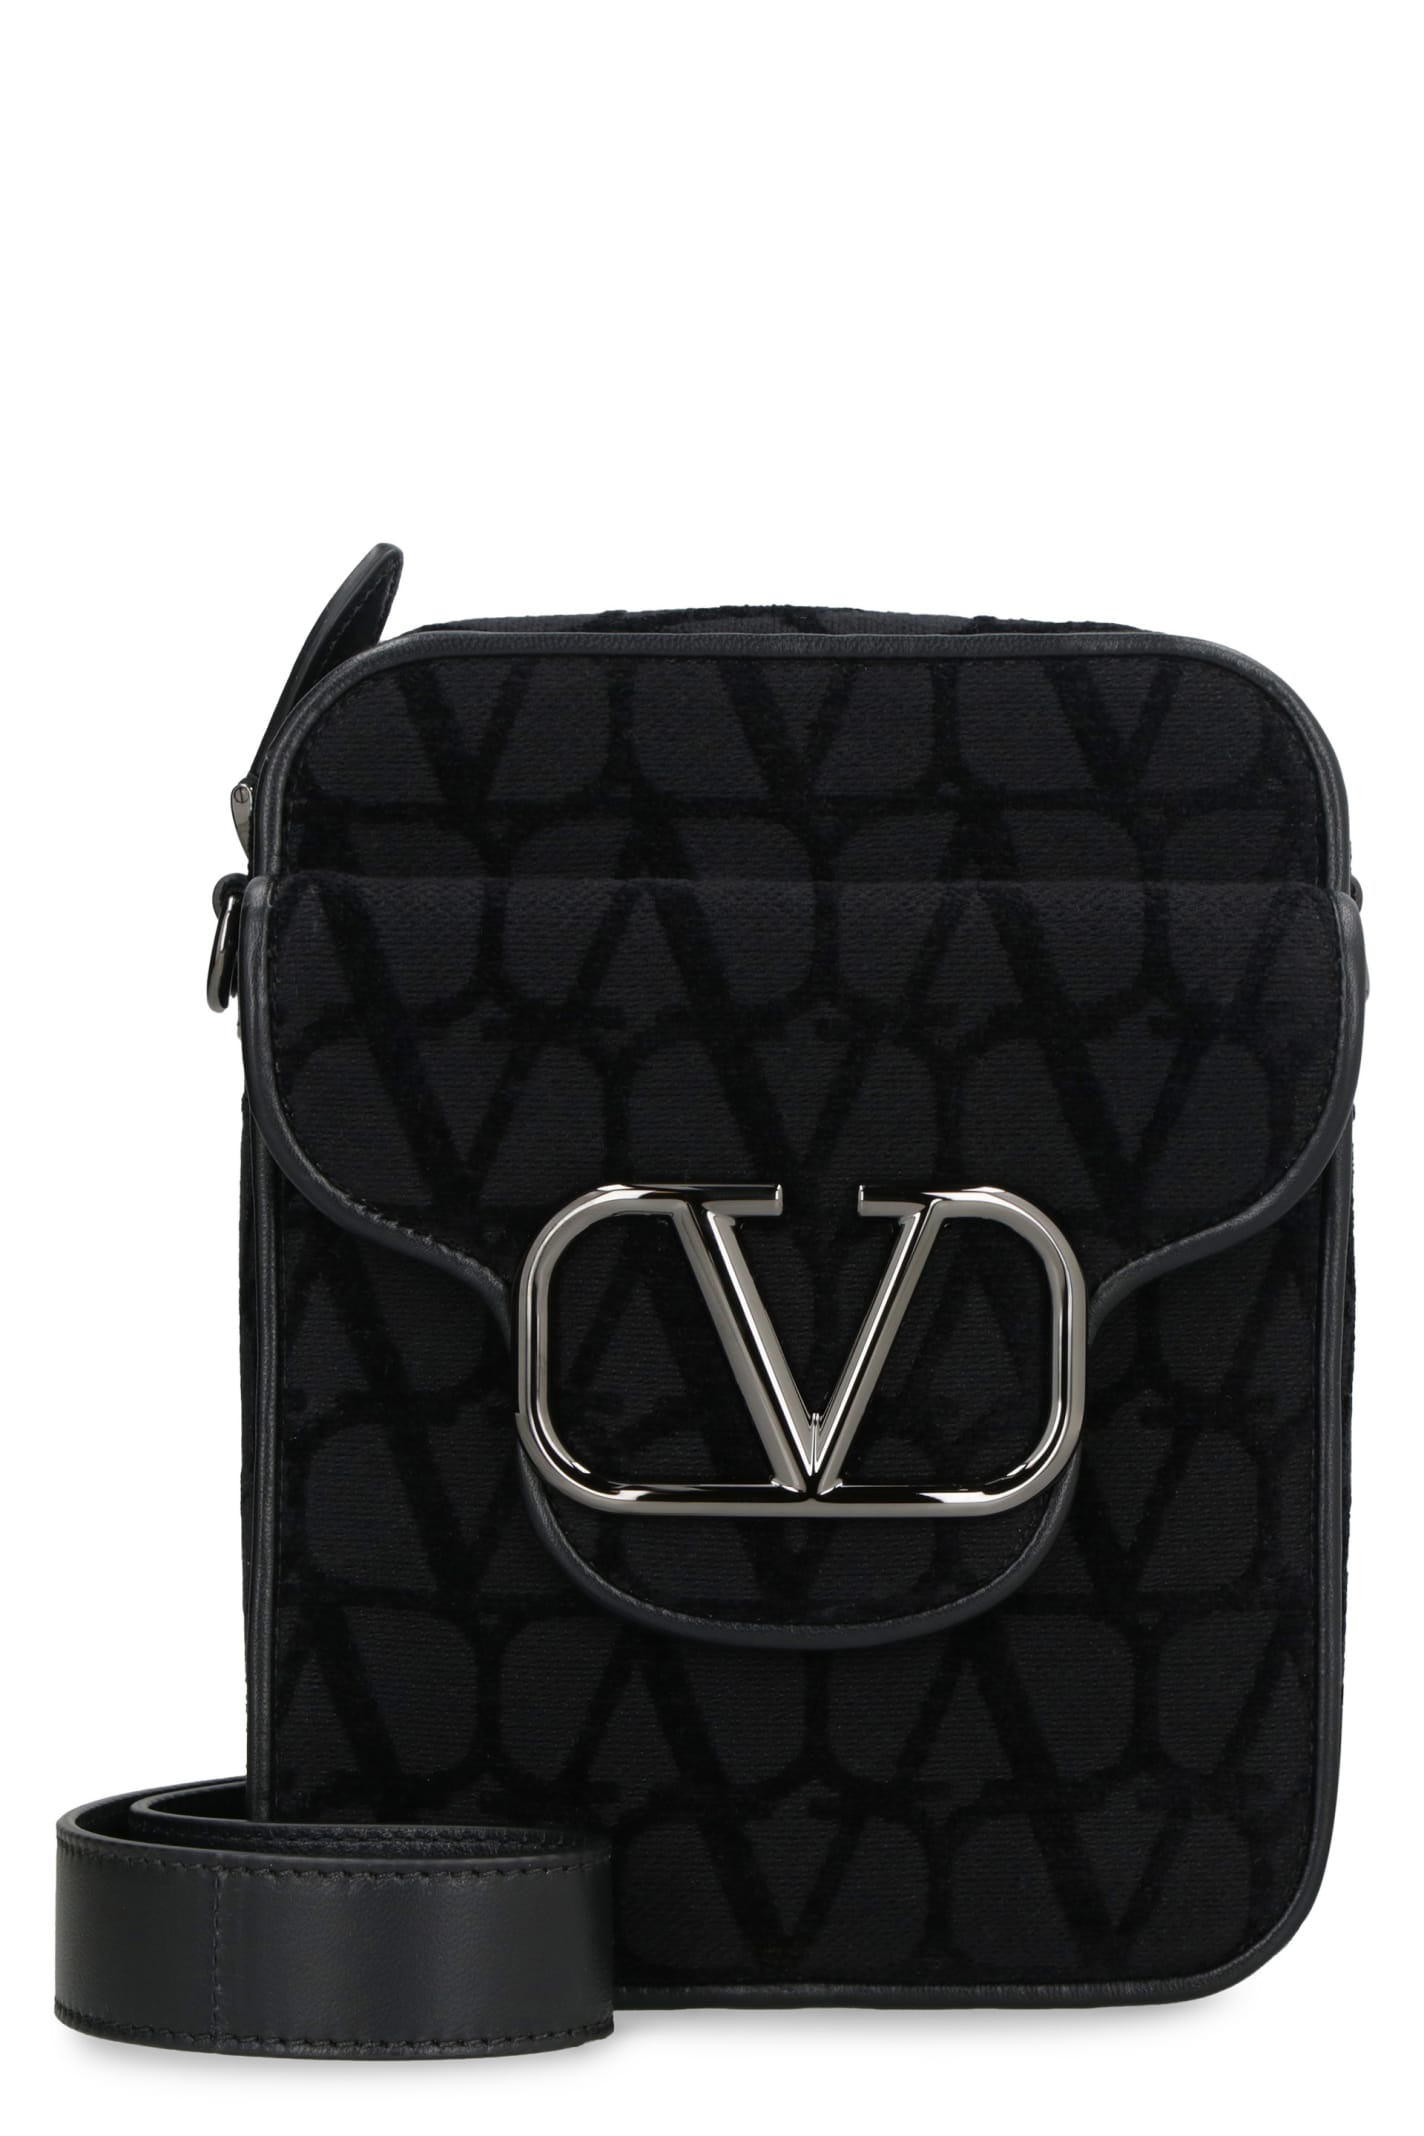 Valentino Fuchsia Leather Small SuperVee Crossbody Bag Valentino